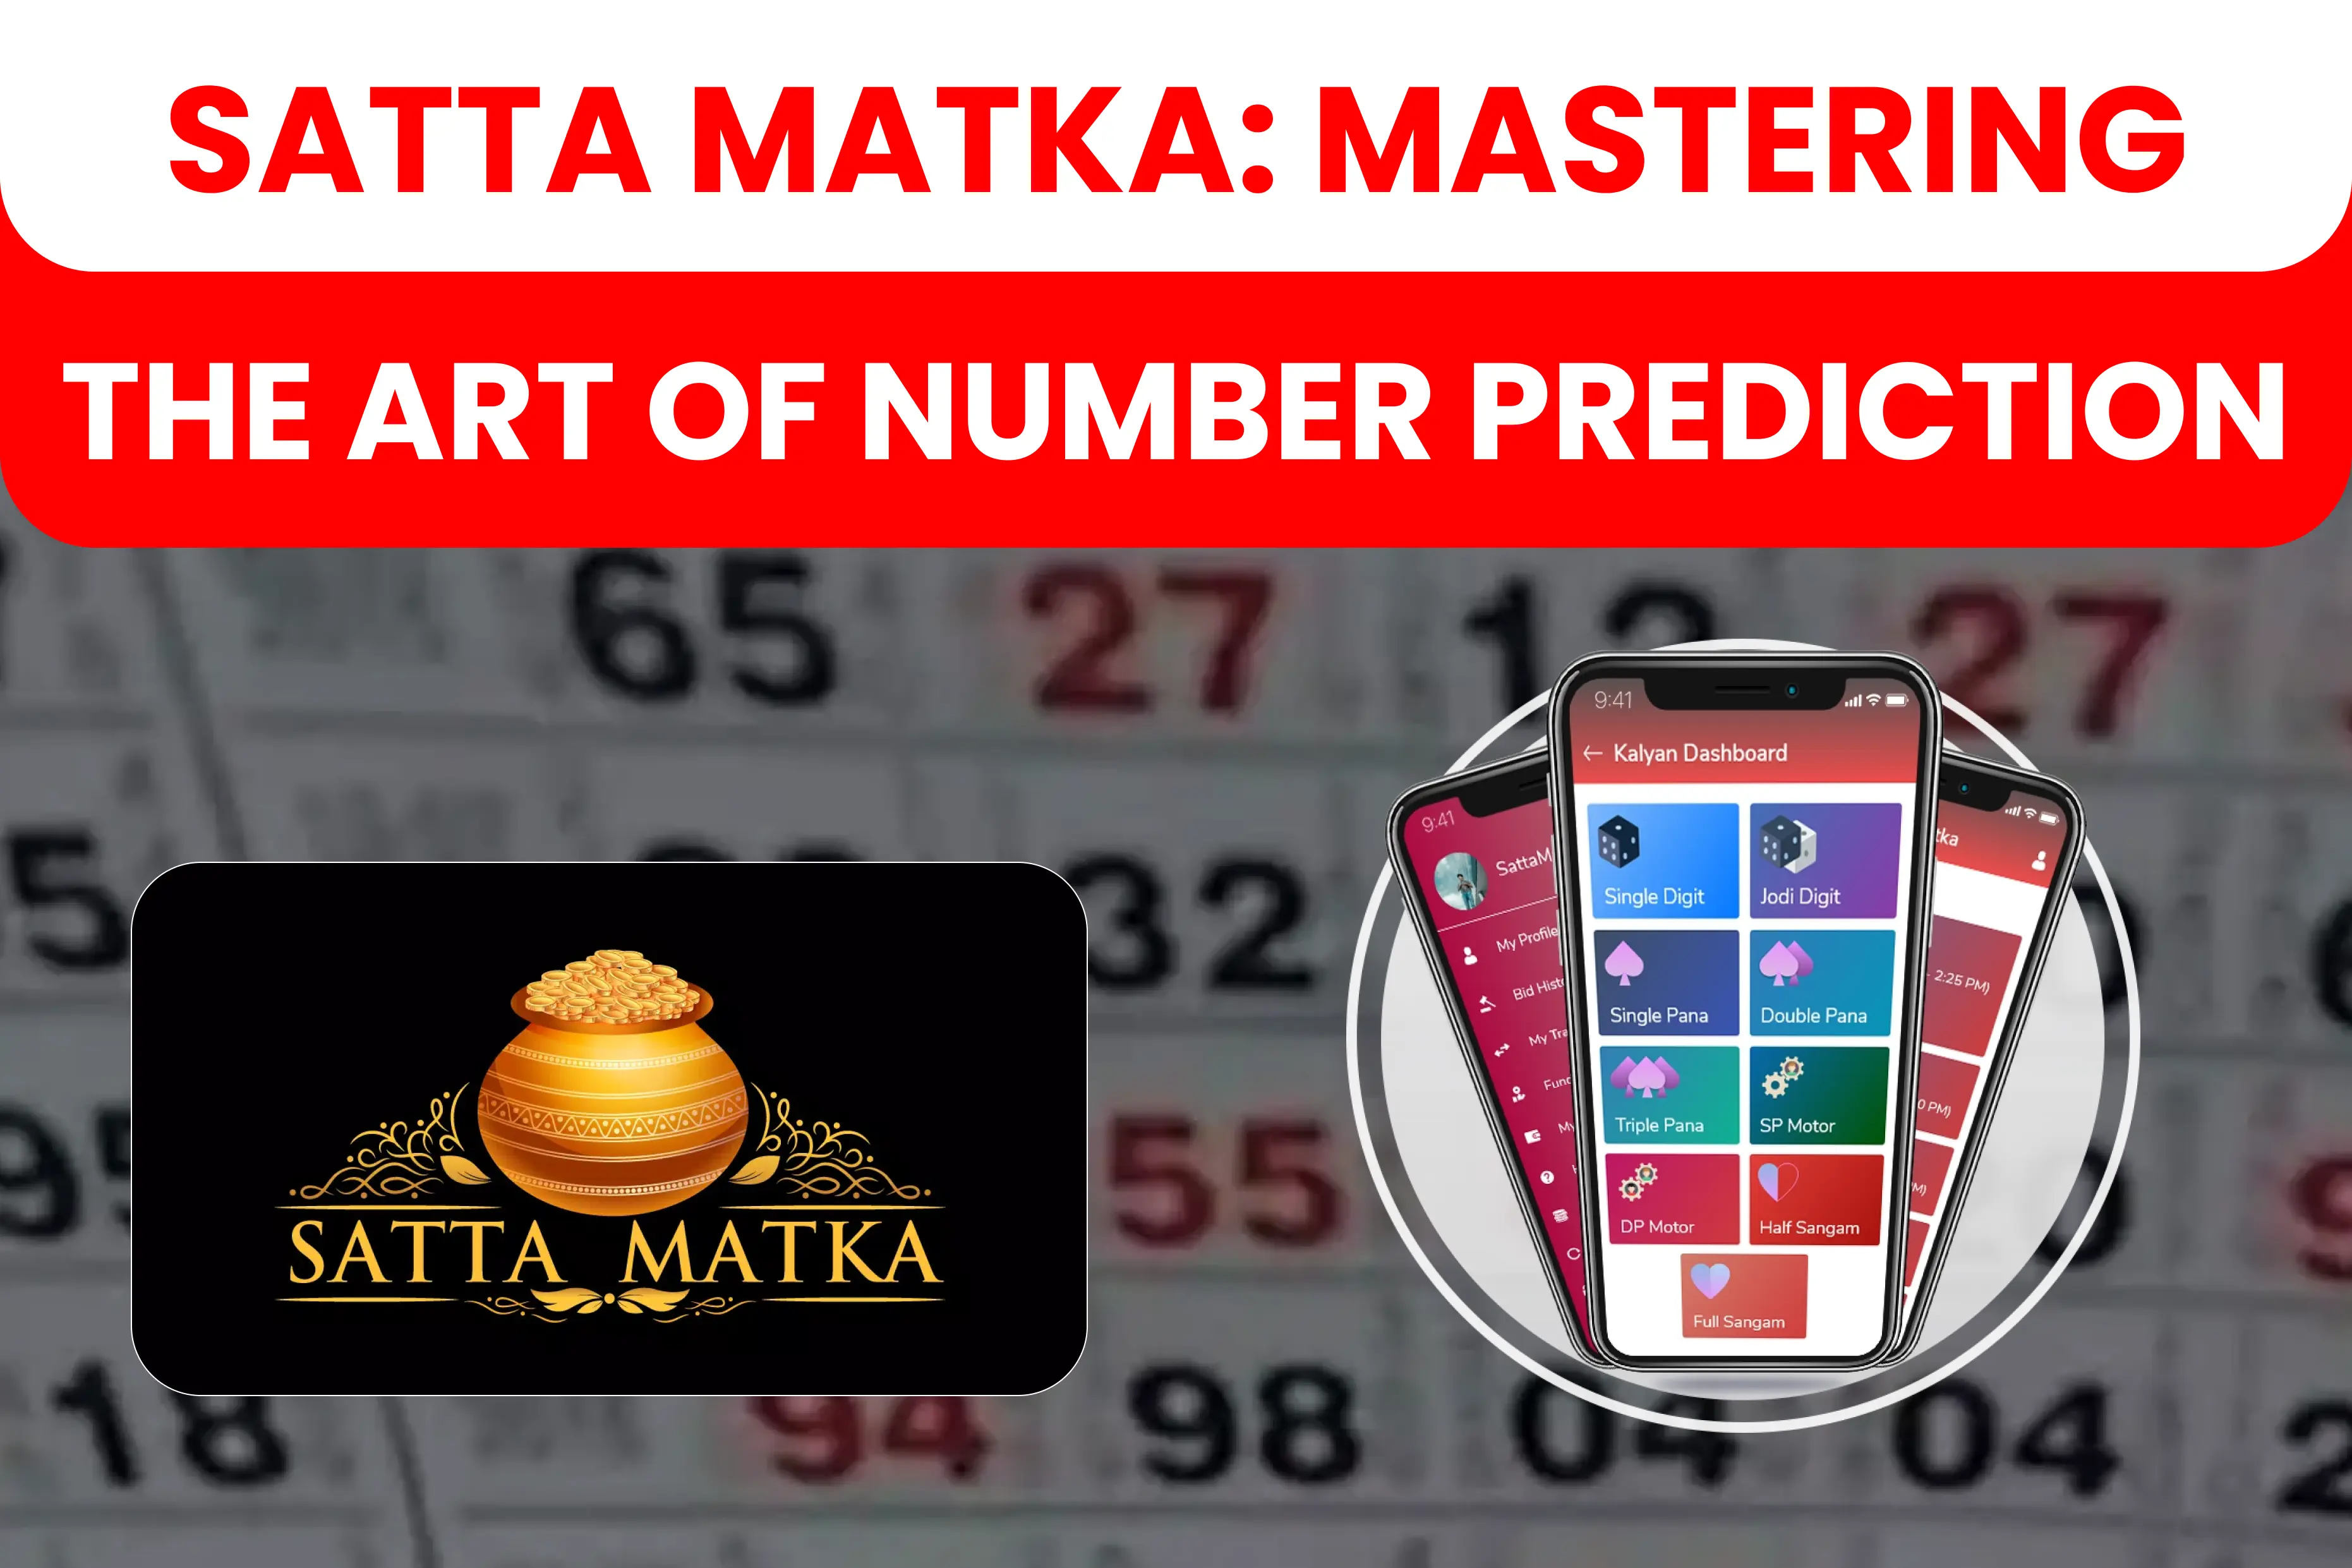 Satta matka: Mastering the Art of Number Prediction